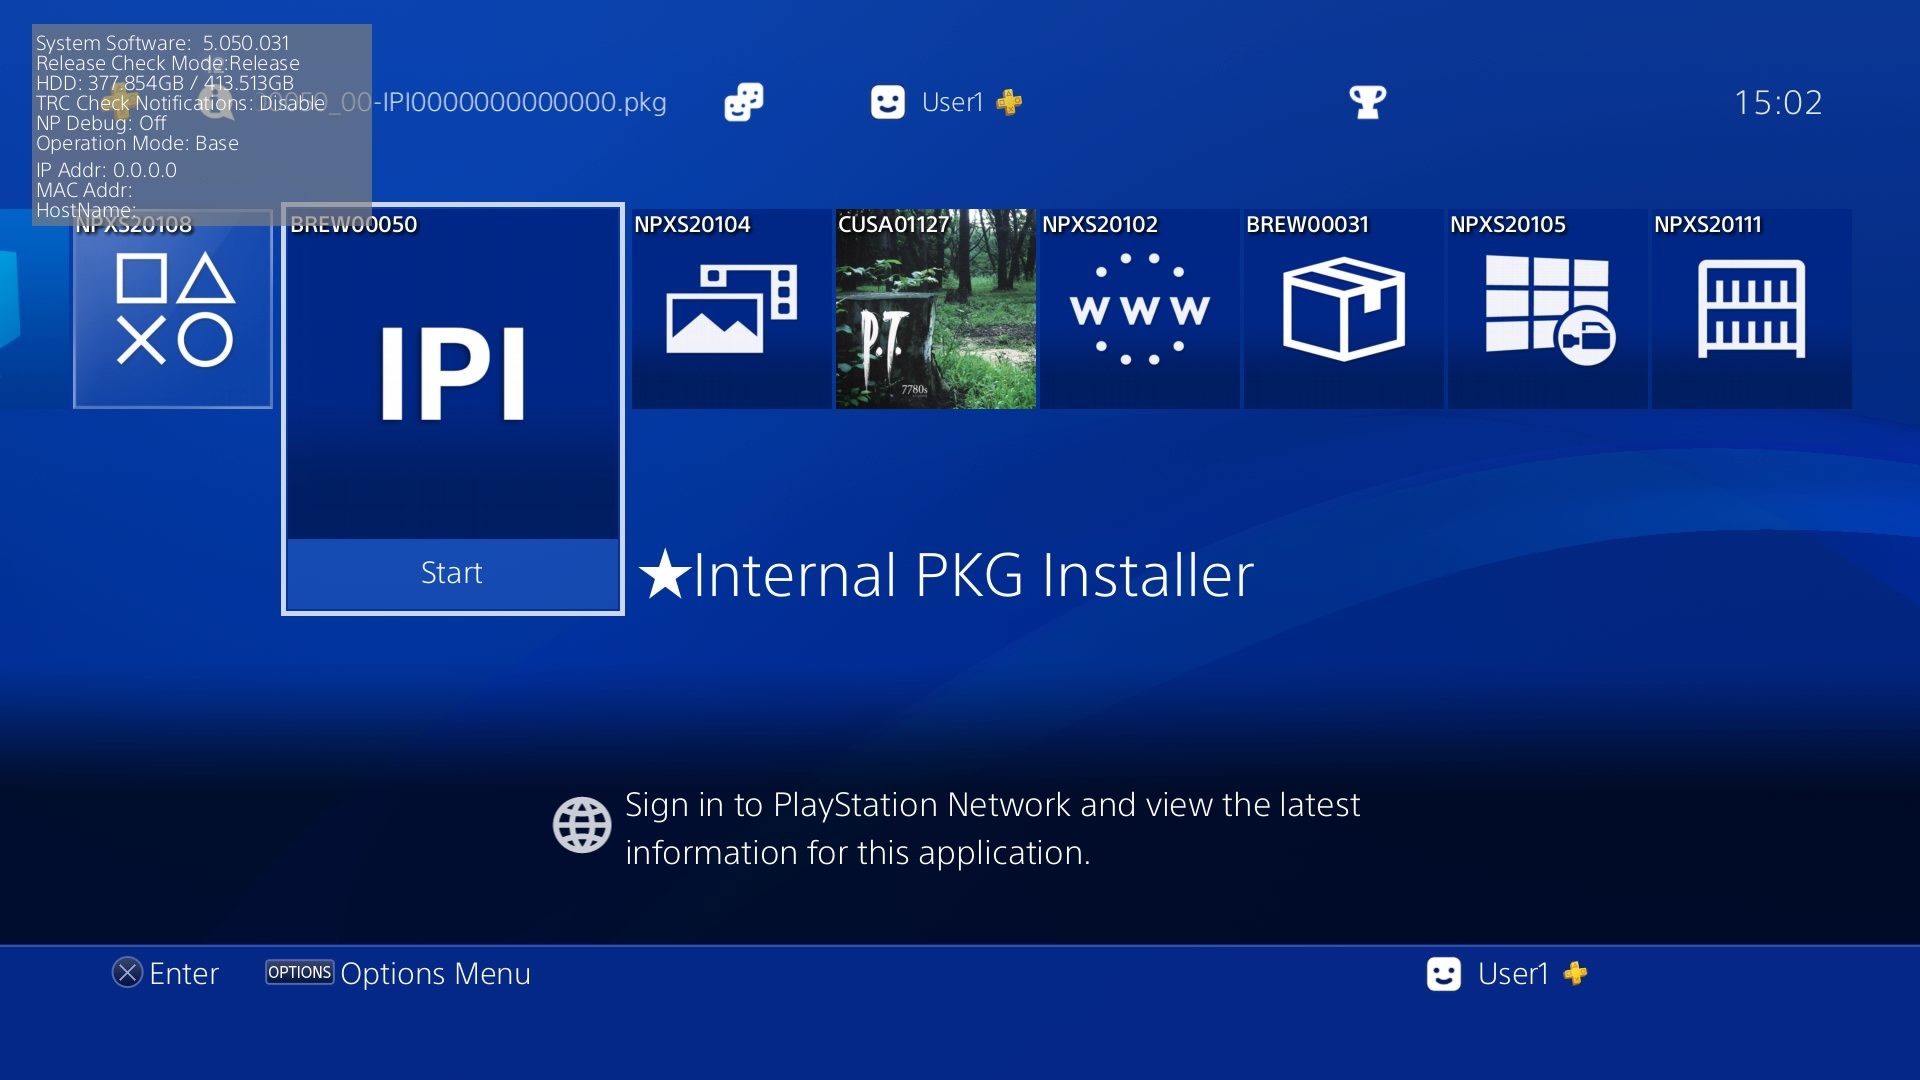 Playstation pkg. Ps4 package installer. Пс4 pkg. Установщик ПС. Ipi , pkg installer.